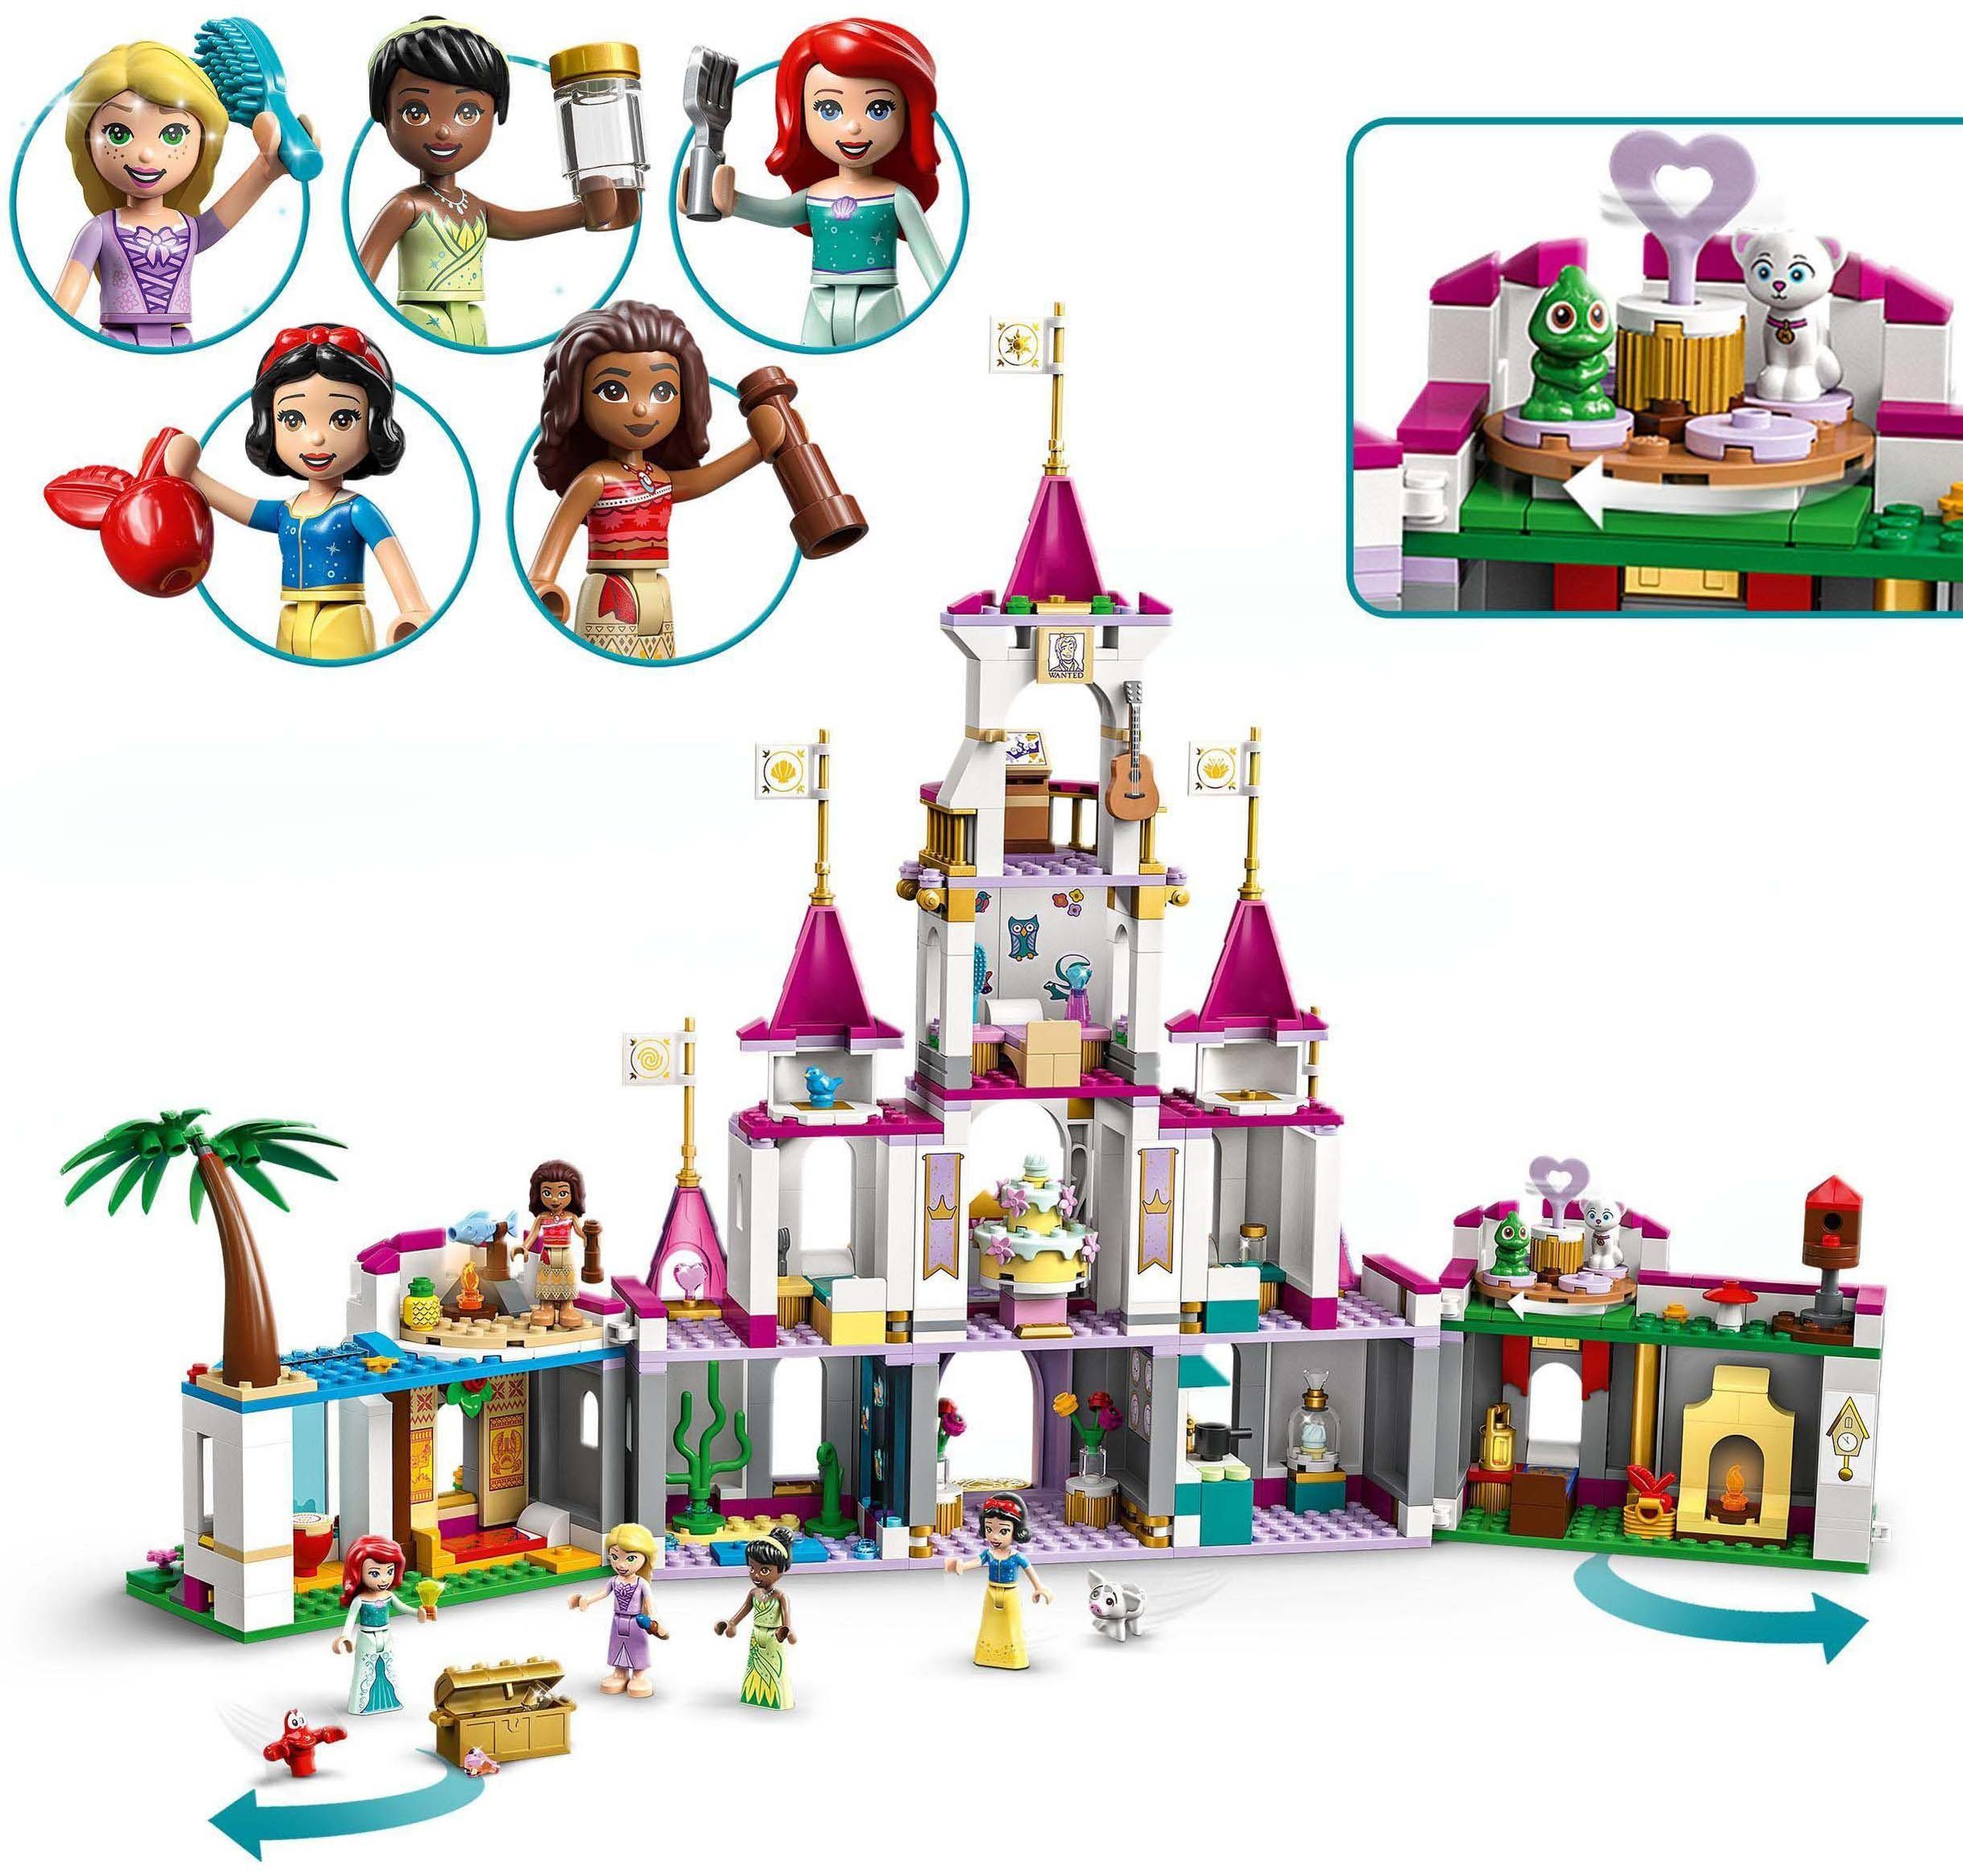 St), in (698 (43205), LEGO® LEGO® Konstruktionsspielsteine Made Ultimatives Disney Europe Abenteuerschloss Princess™,